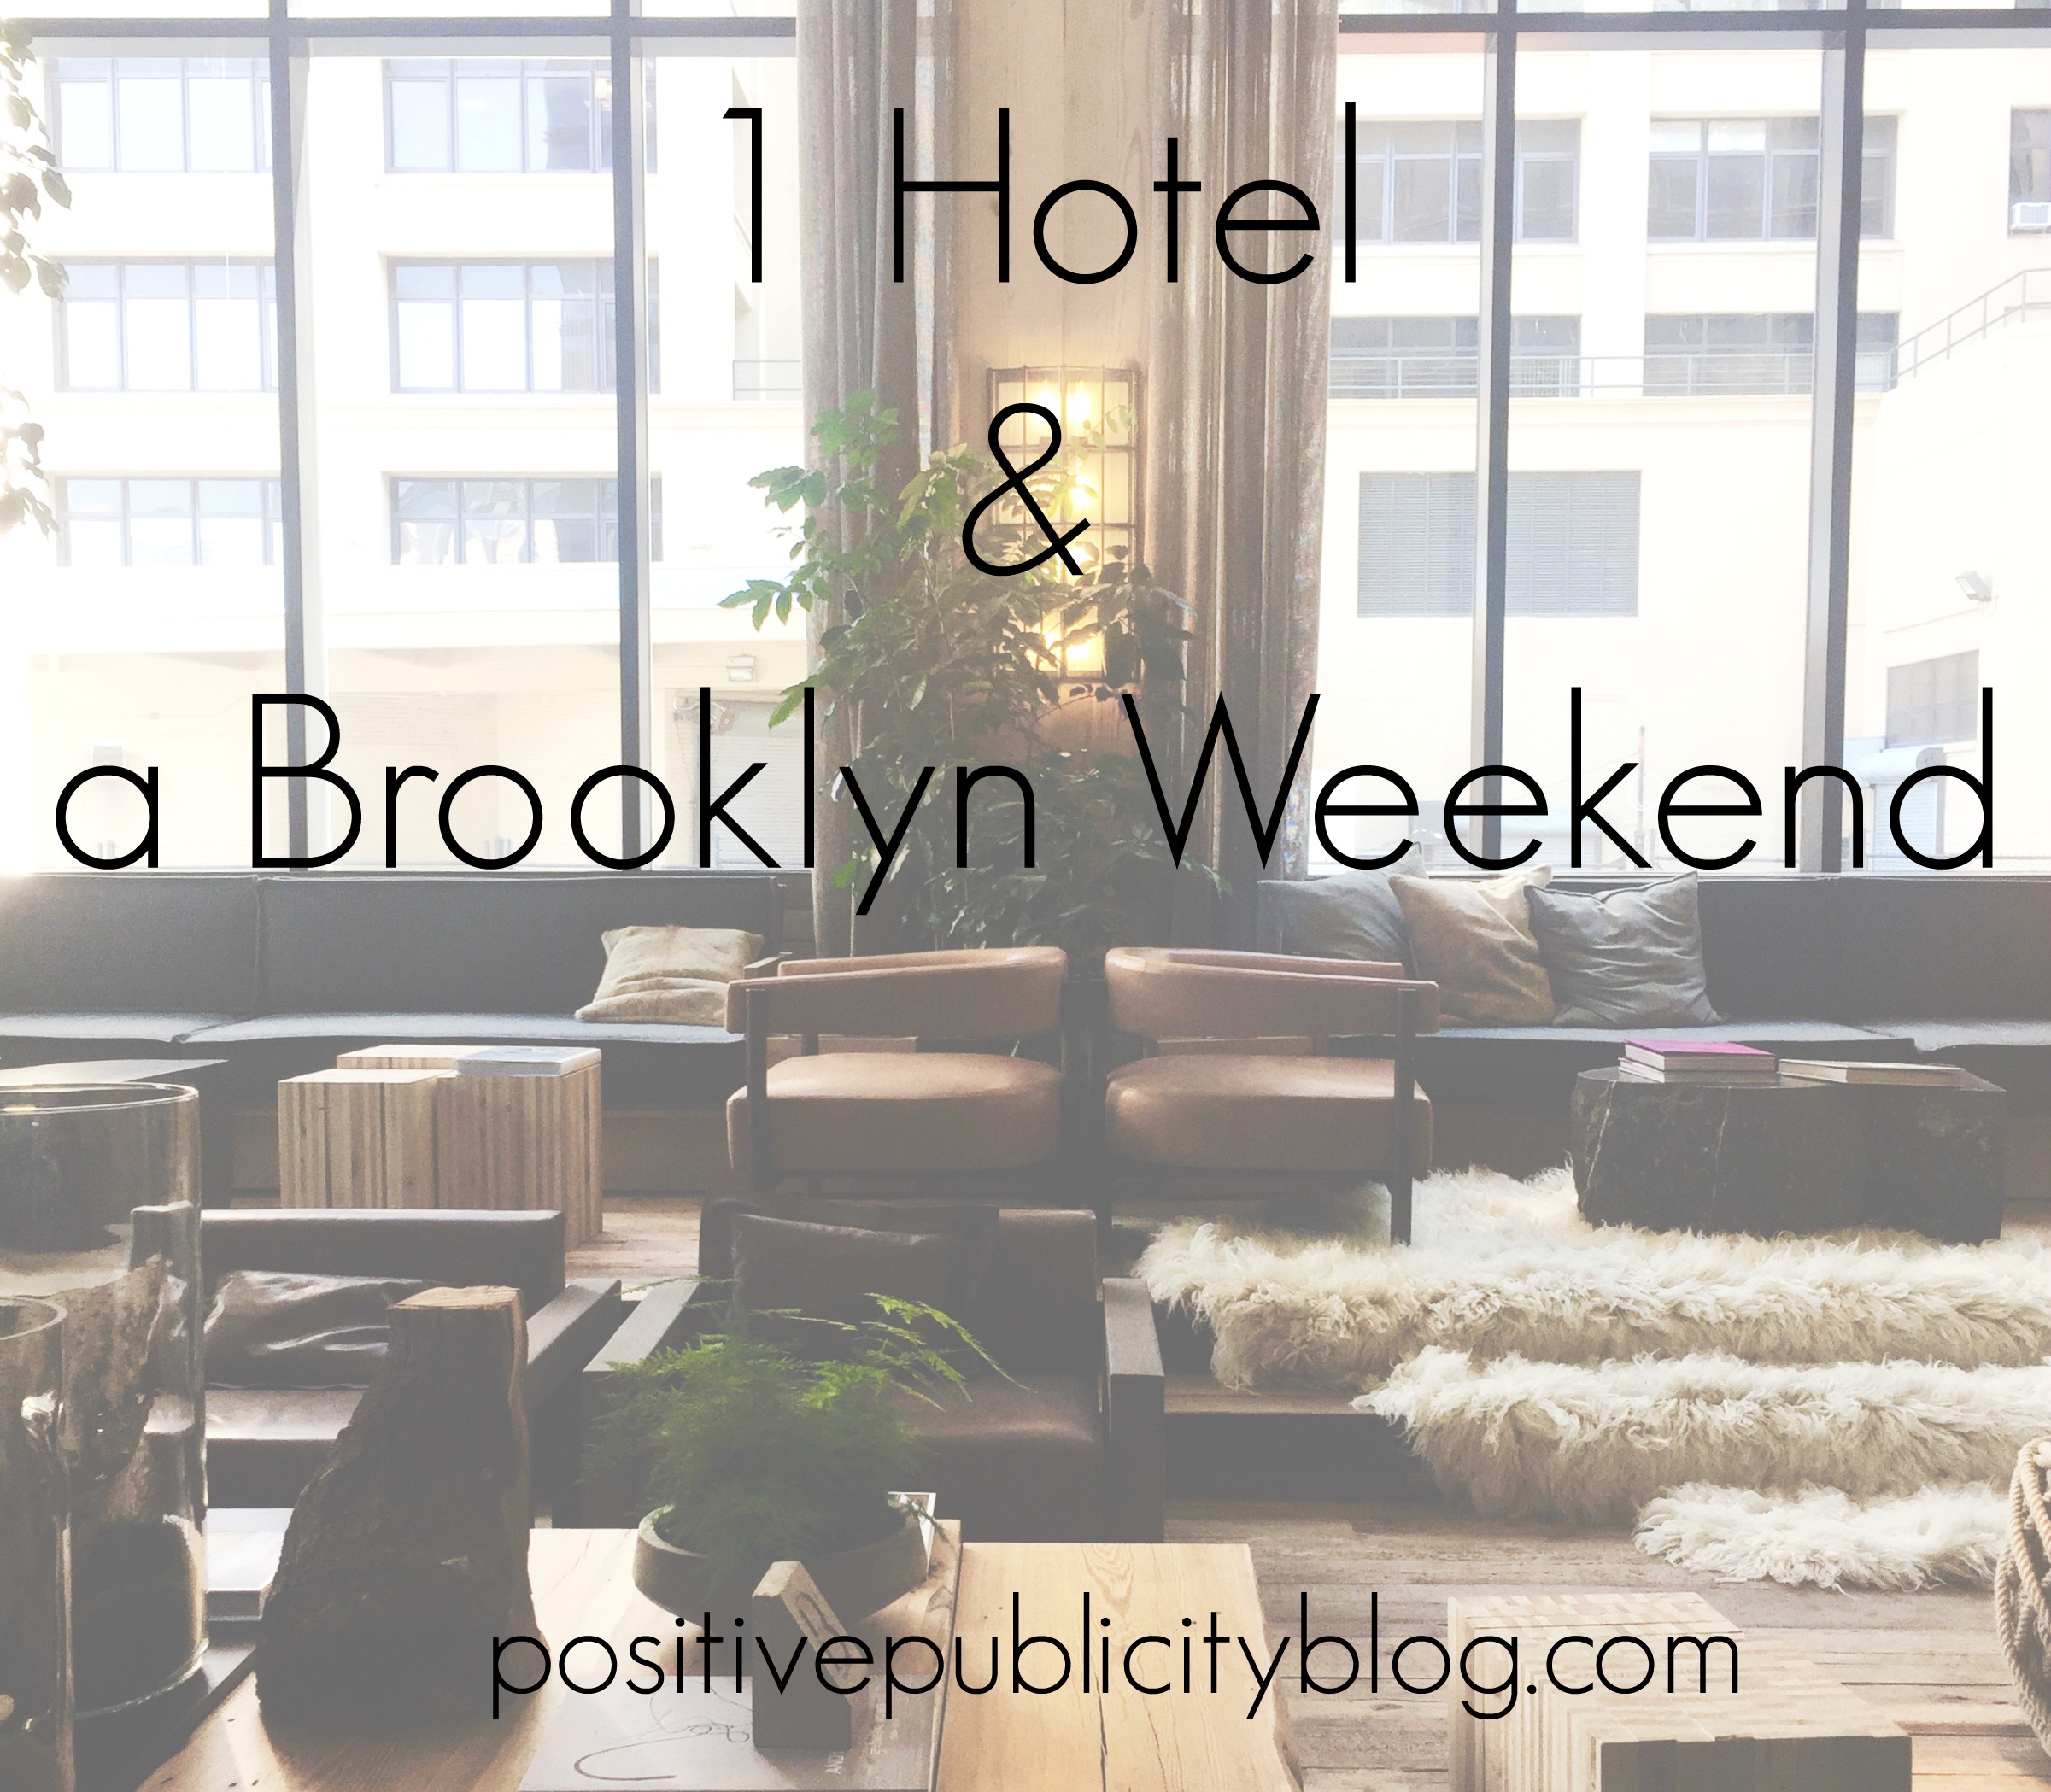 Greenery at 1 Hotel & a Brooklyn Weekend